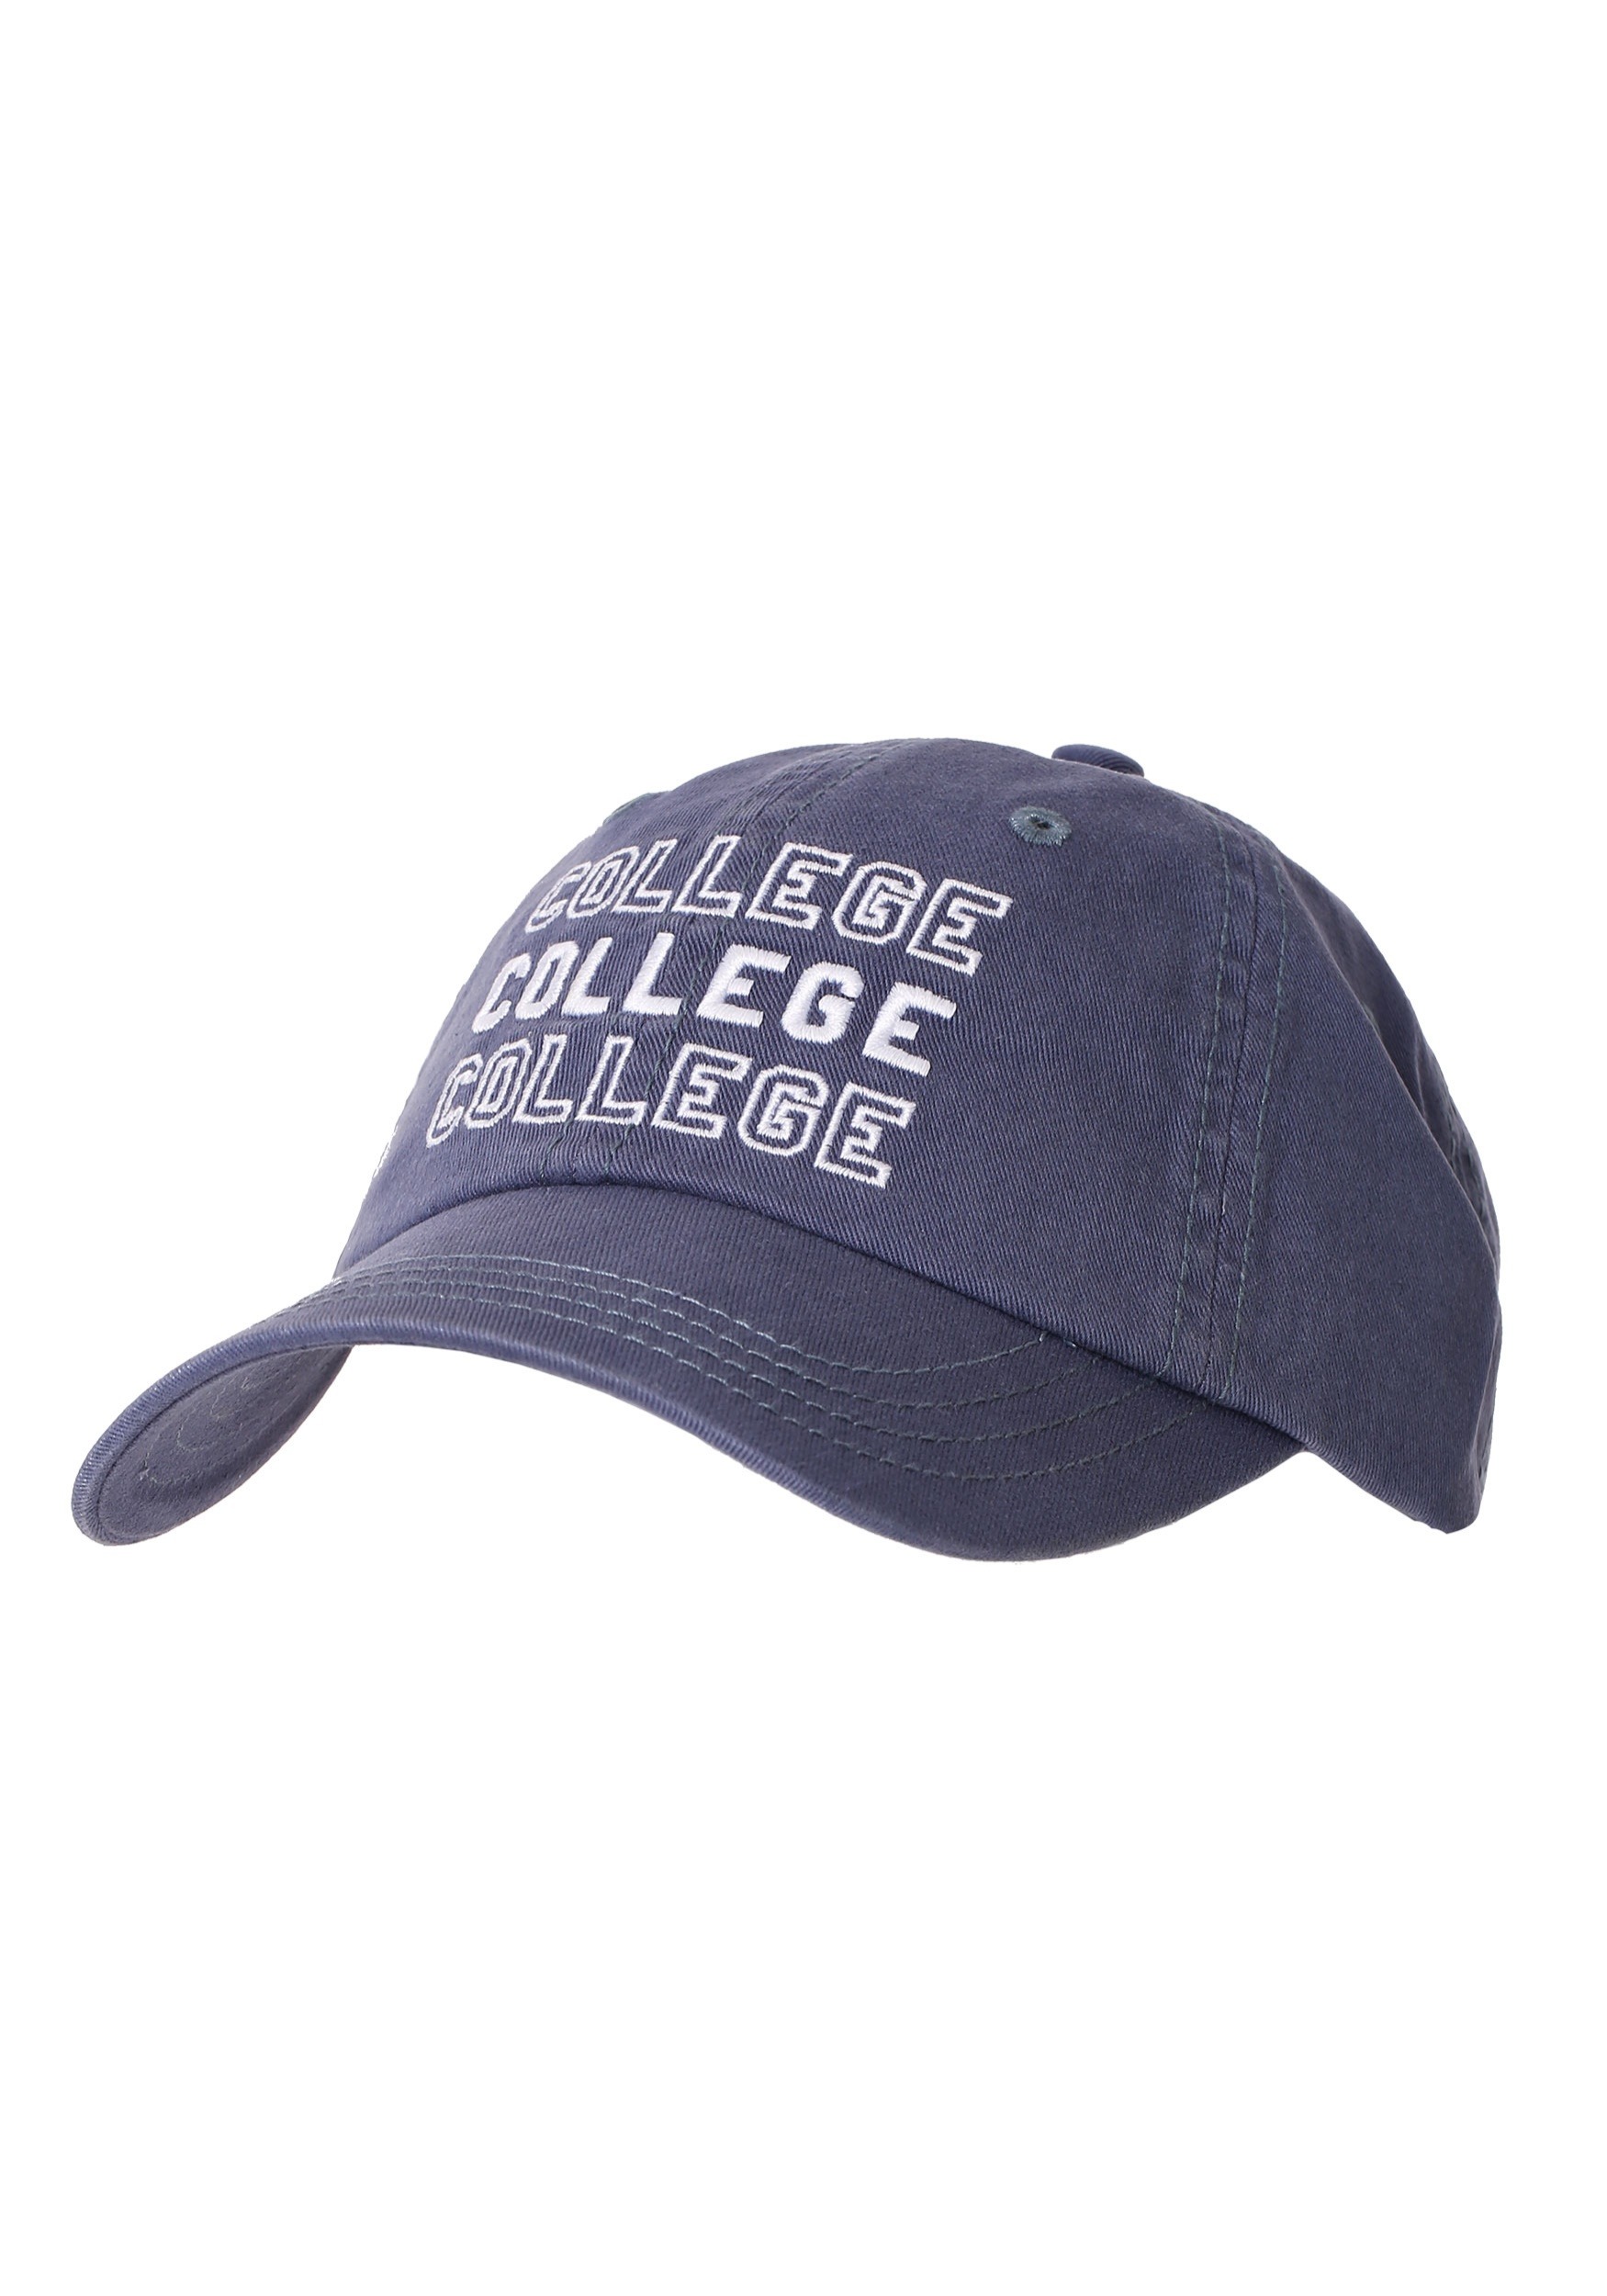 College Blue Dad Baseball Cap